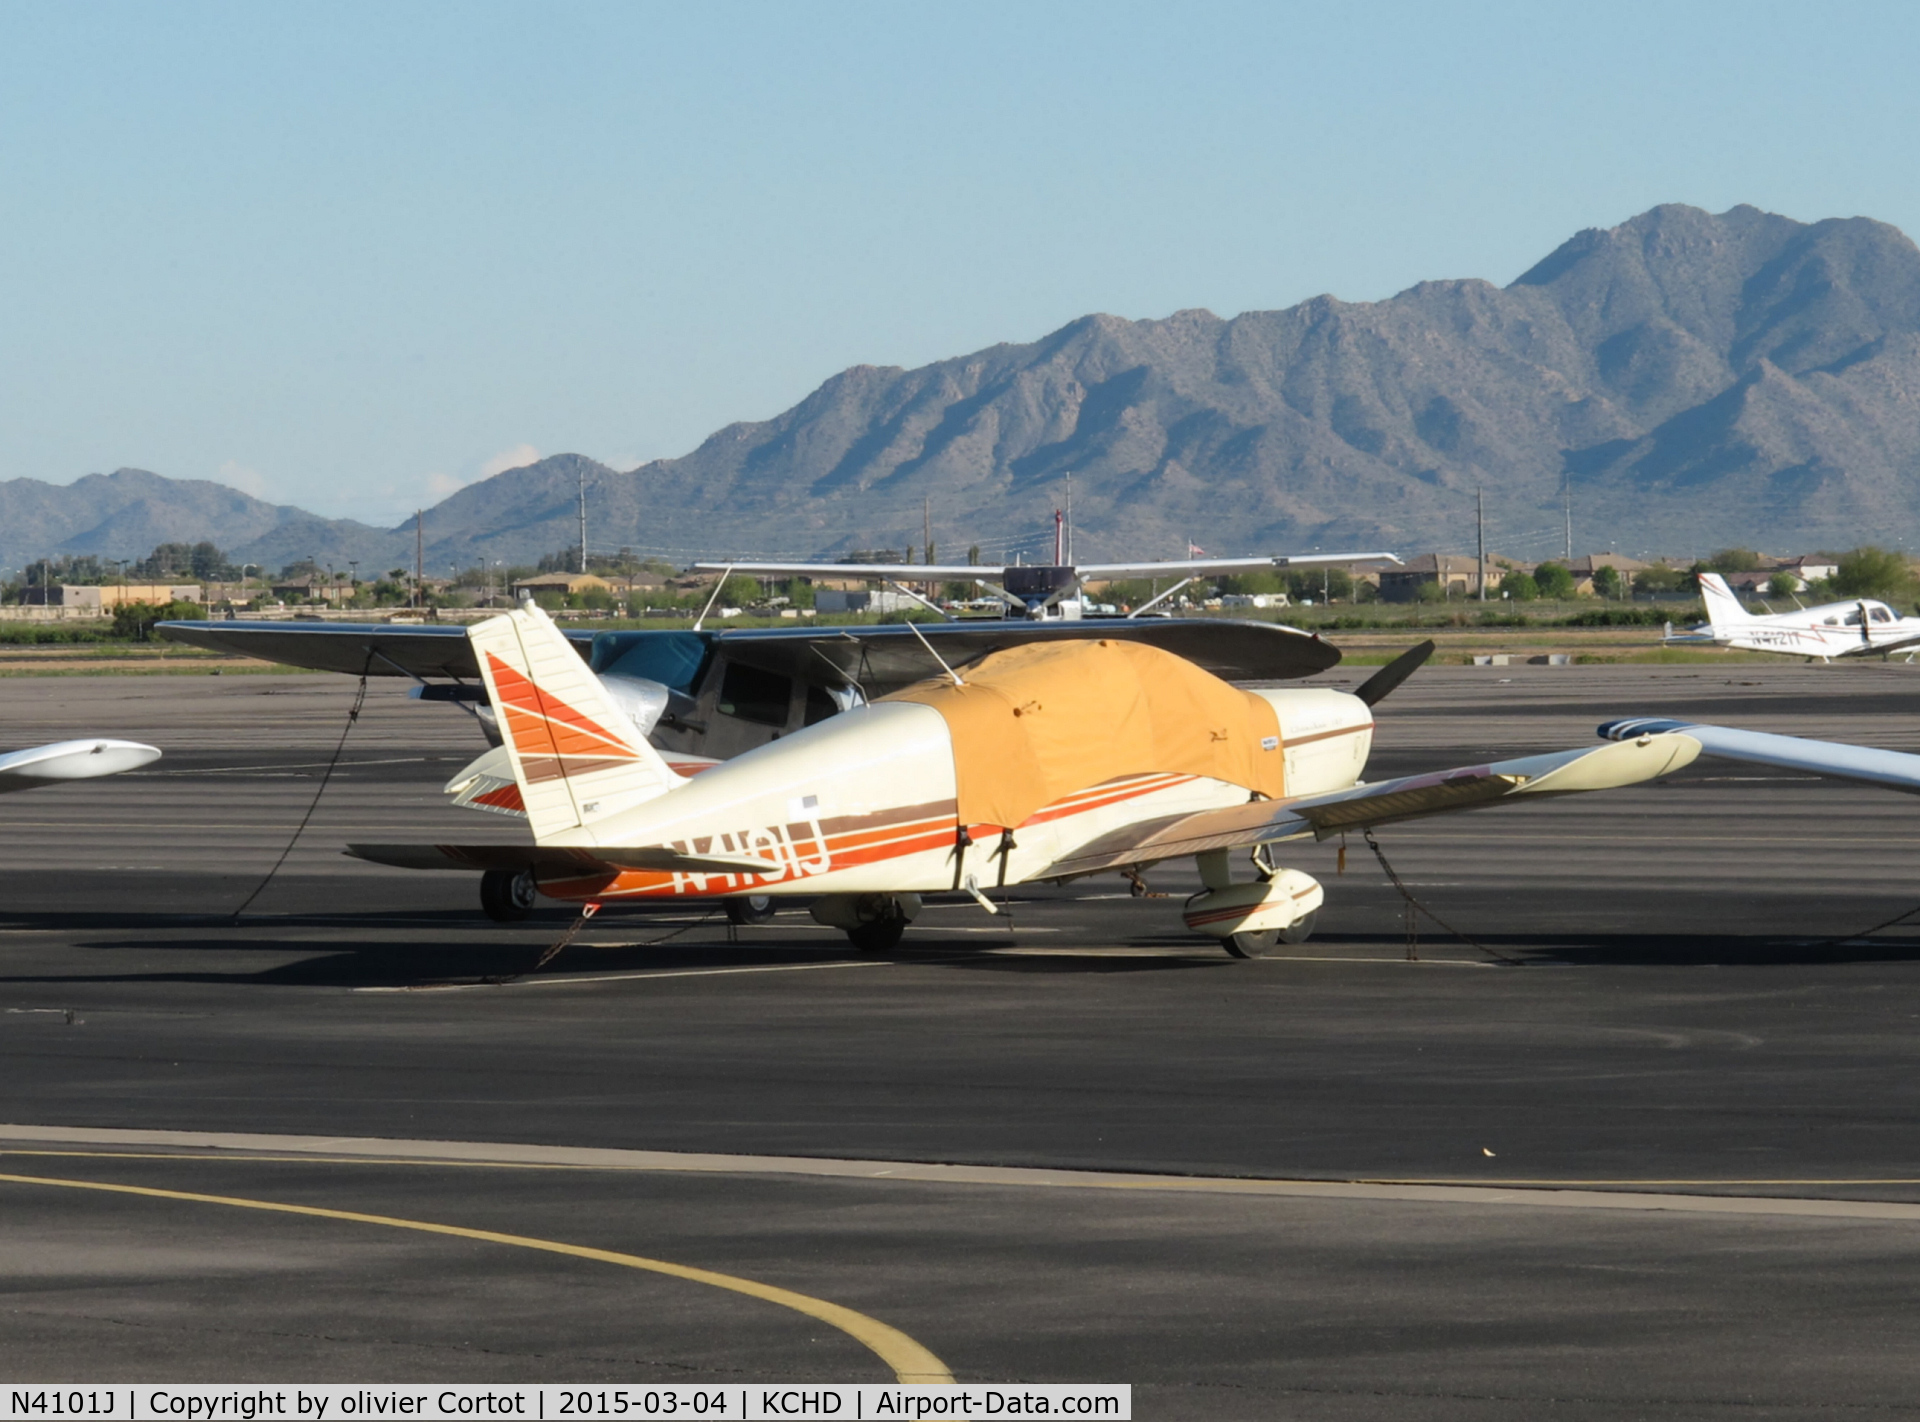 N4101J, 1966 Piper PA-28-140 C/N 28-22413, under the sun of Arizona